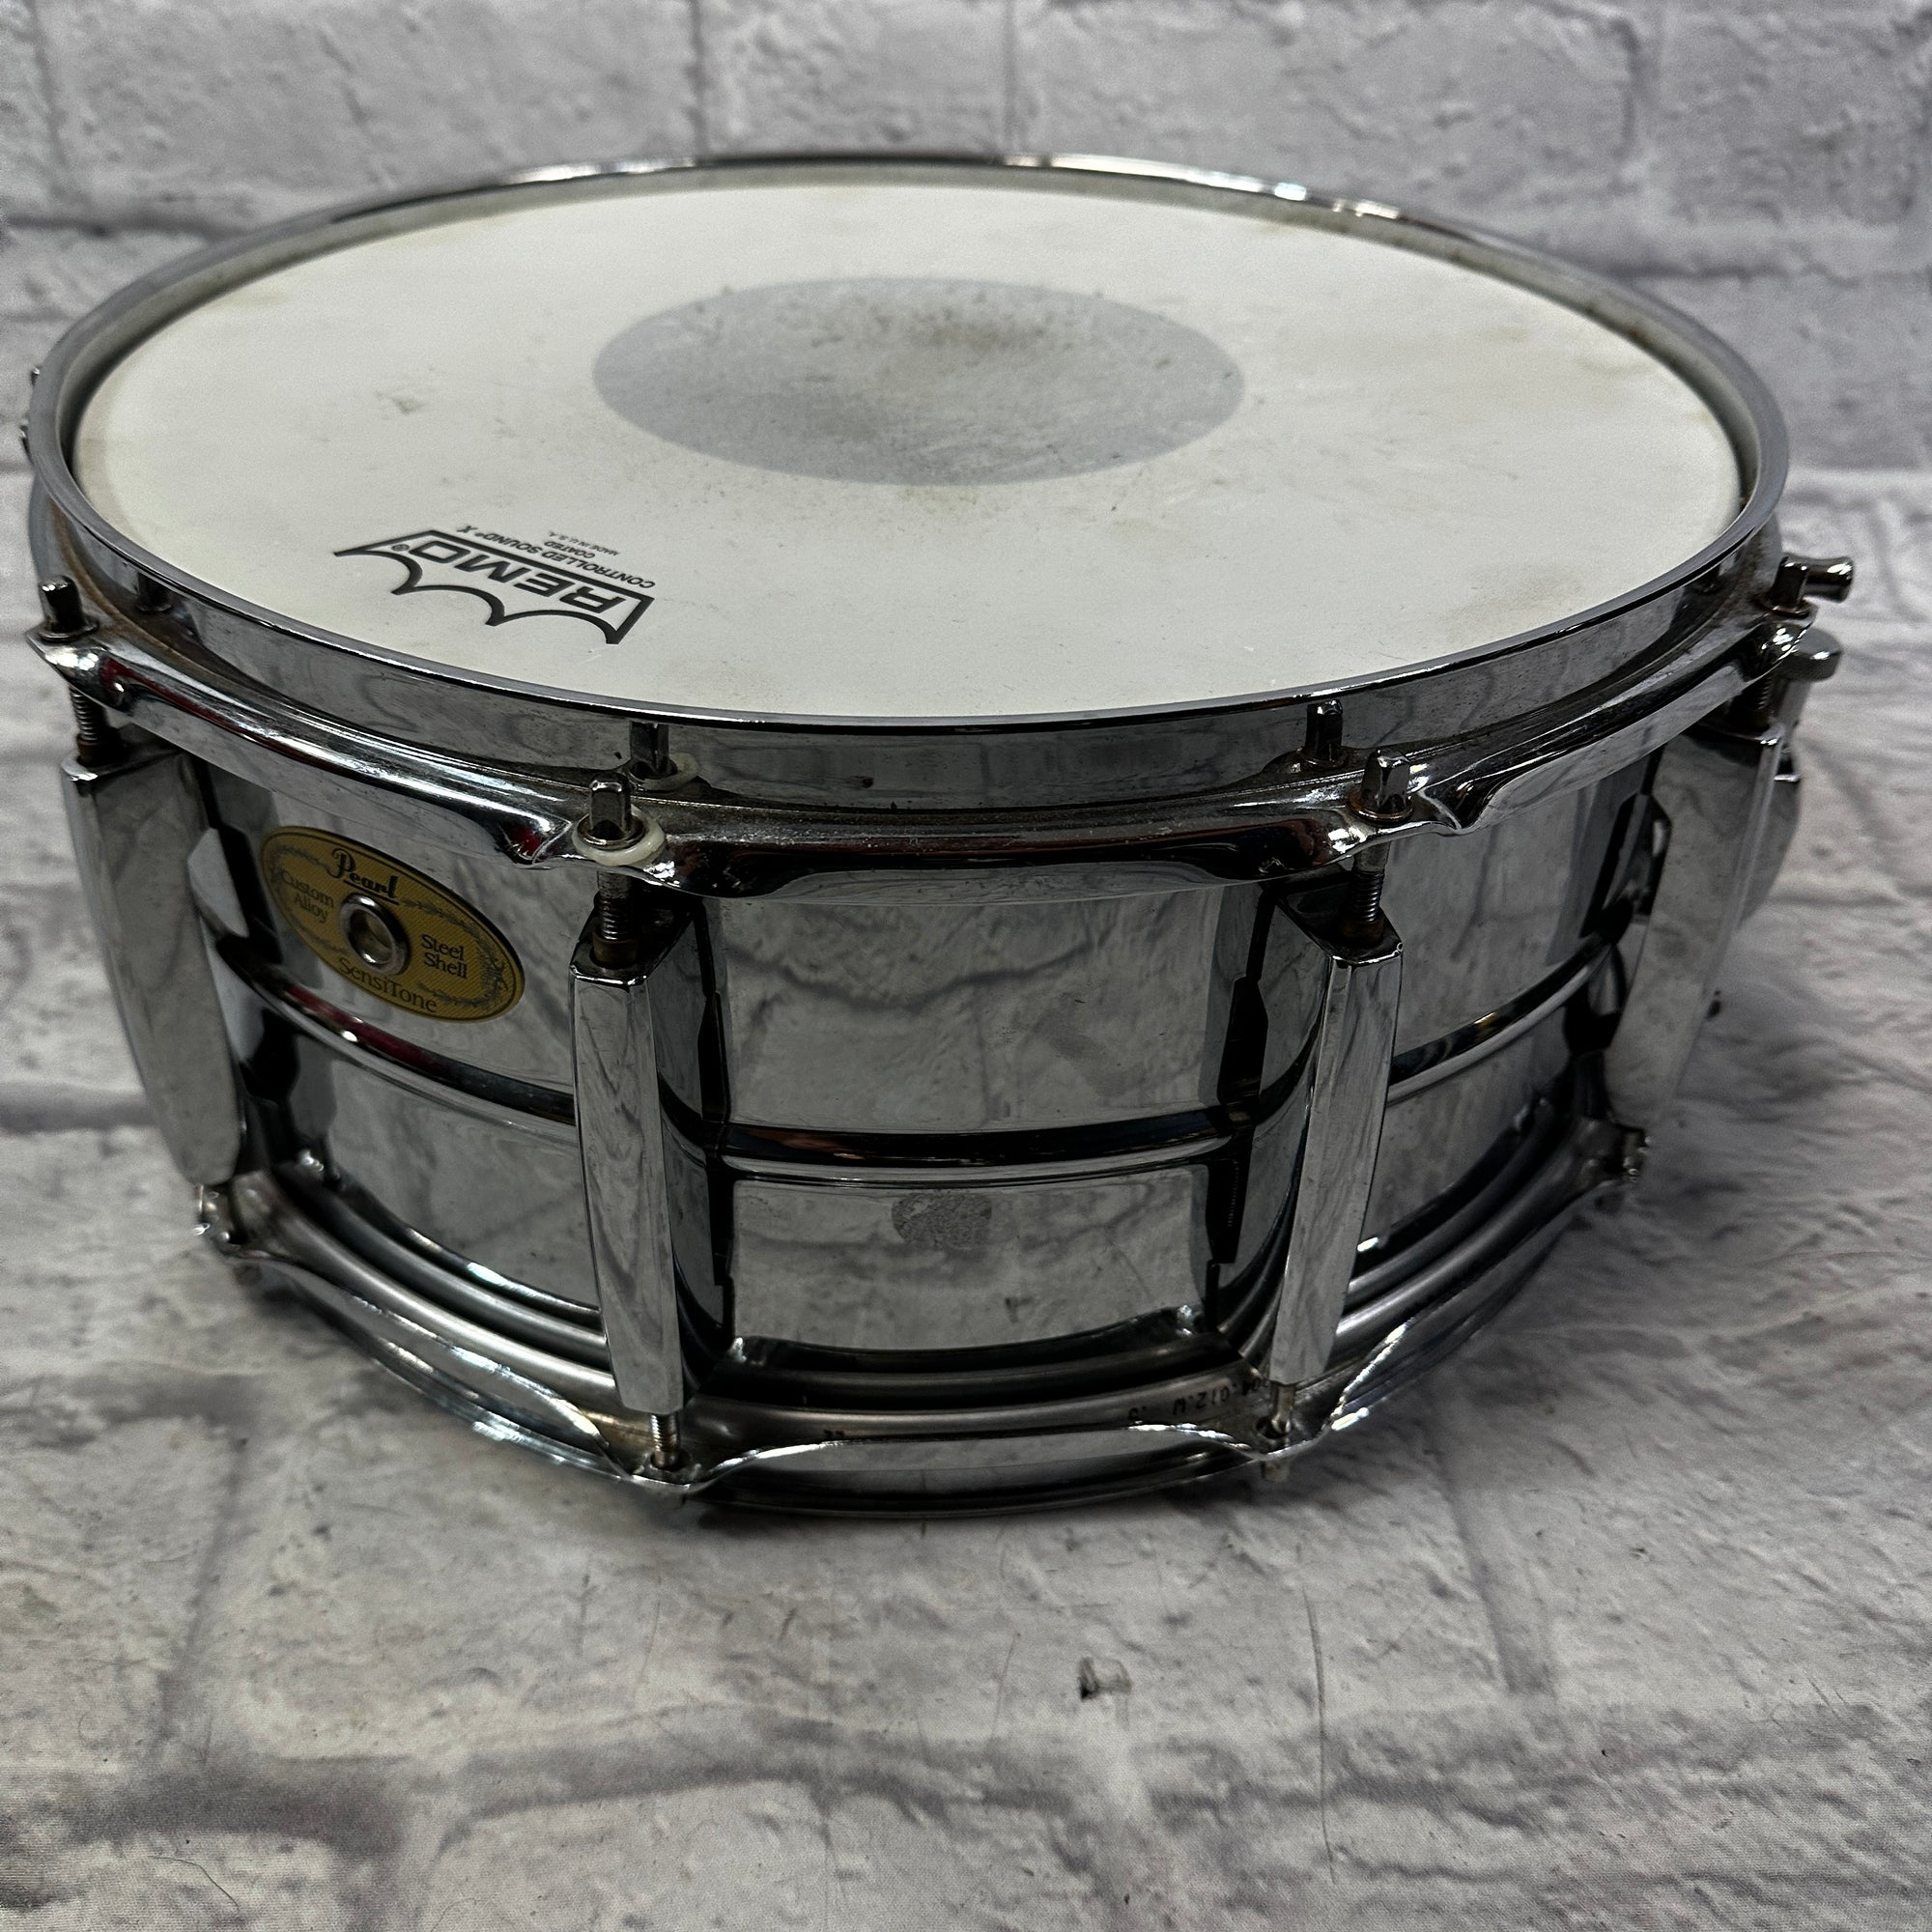 Pearl Sensitone Heritage Steel Alloy Snare Drum X 14-inch Polished, Pearl  Sensitone Snare